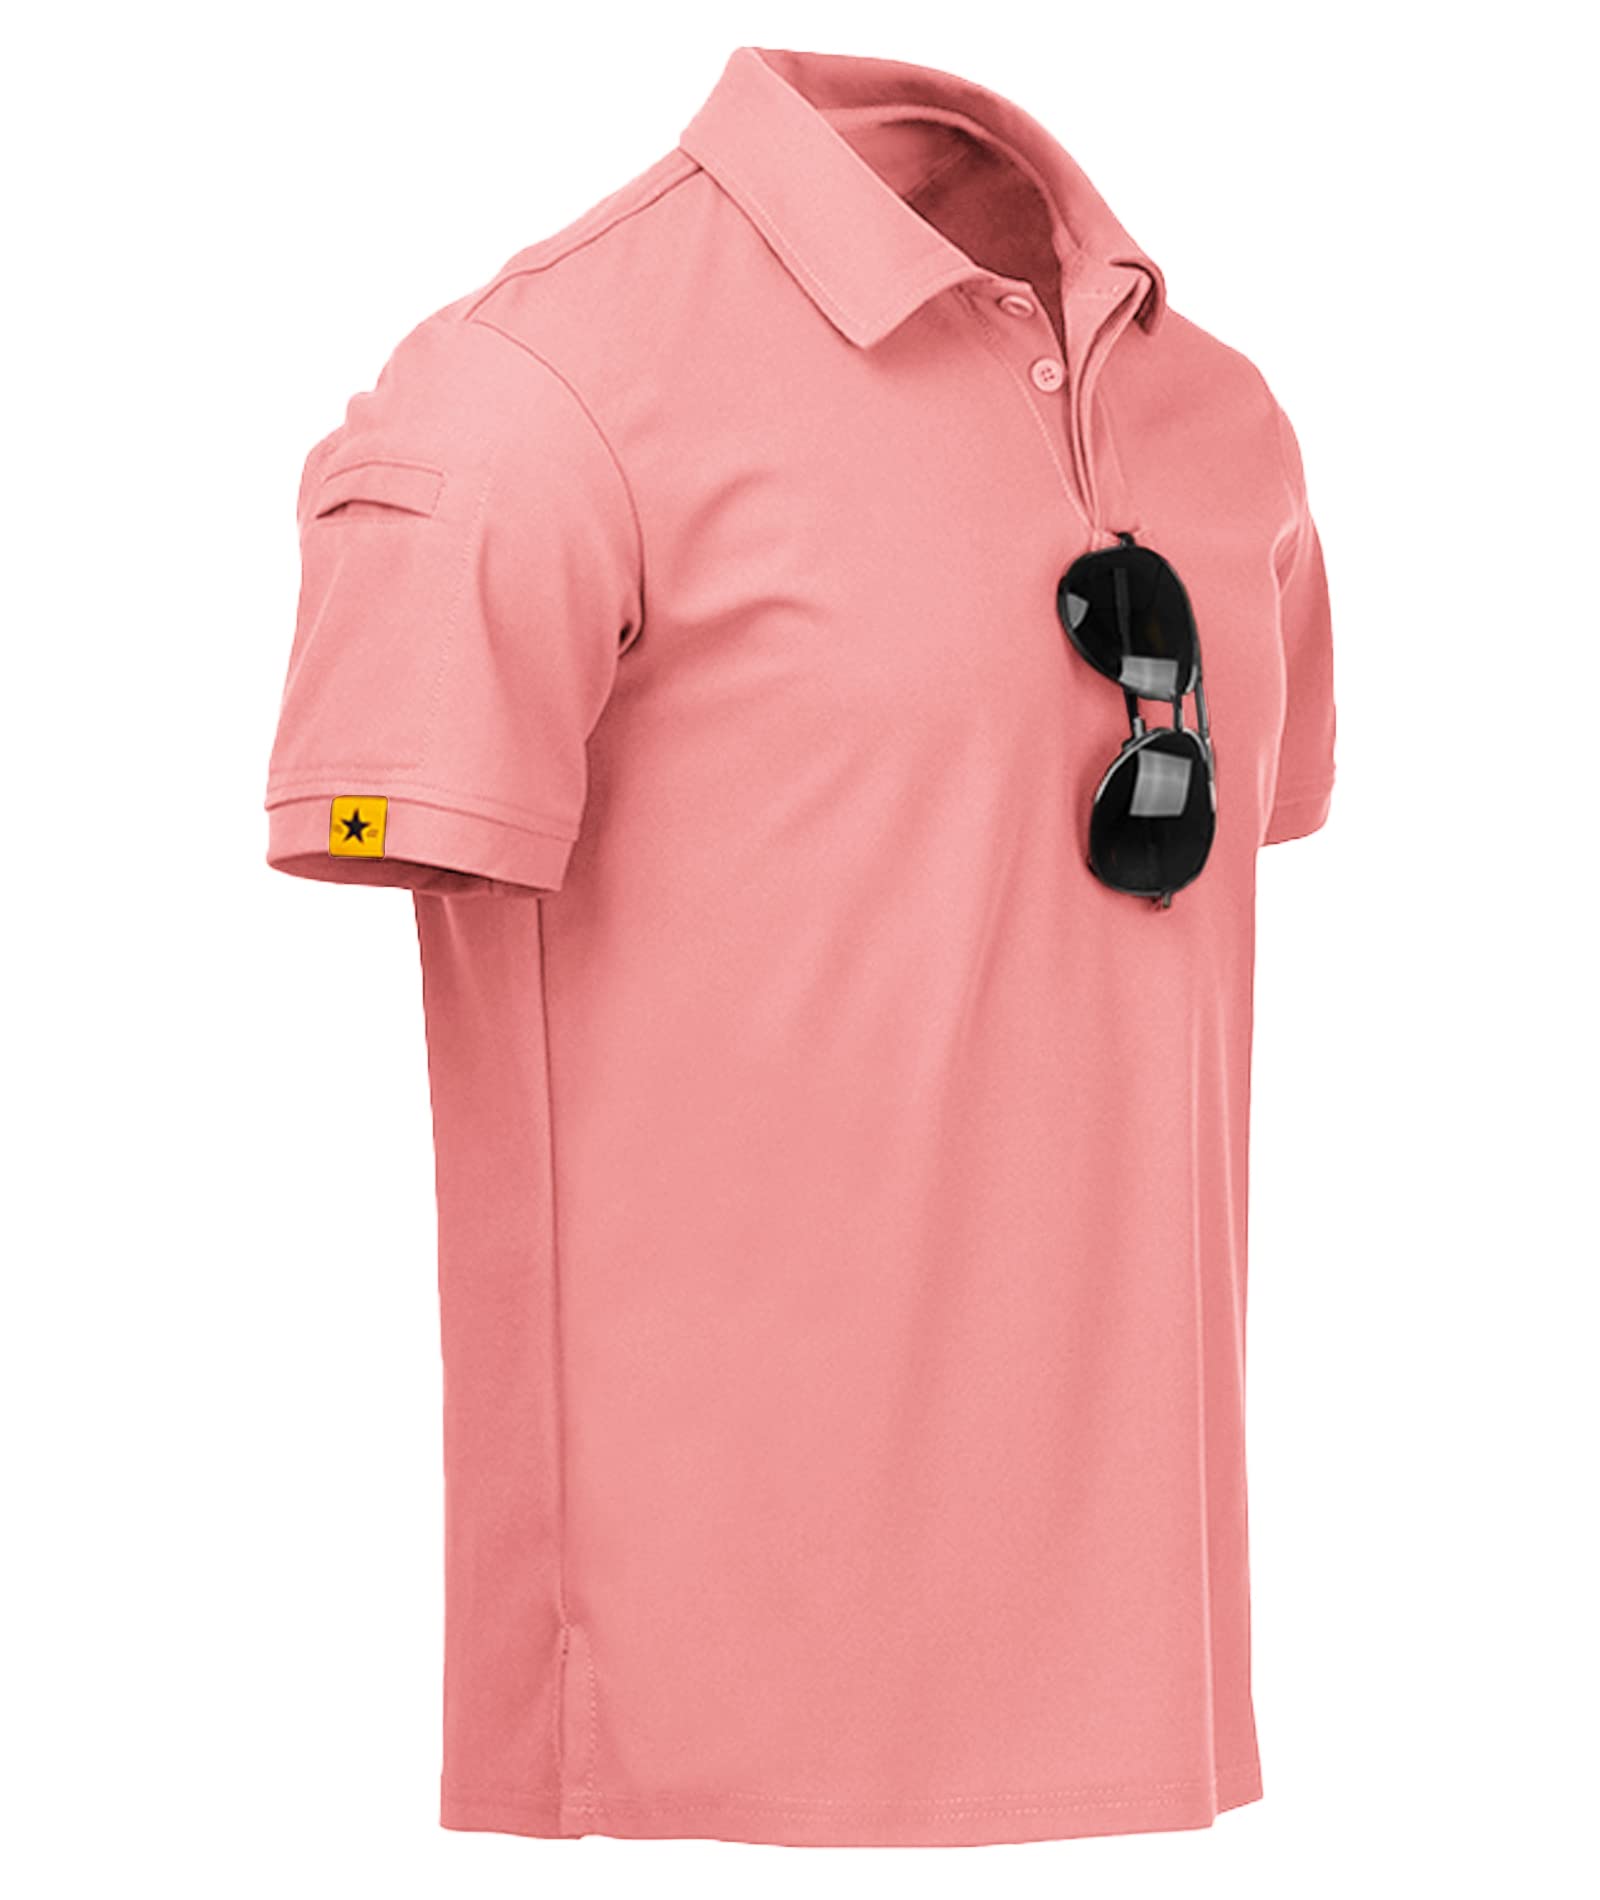 JACKETOWN Mens Polo Shirt Short Sleeve Moisture Wicking Golf